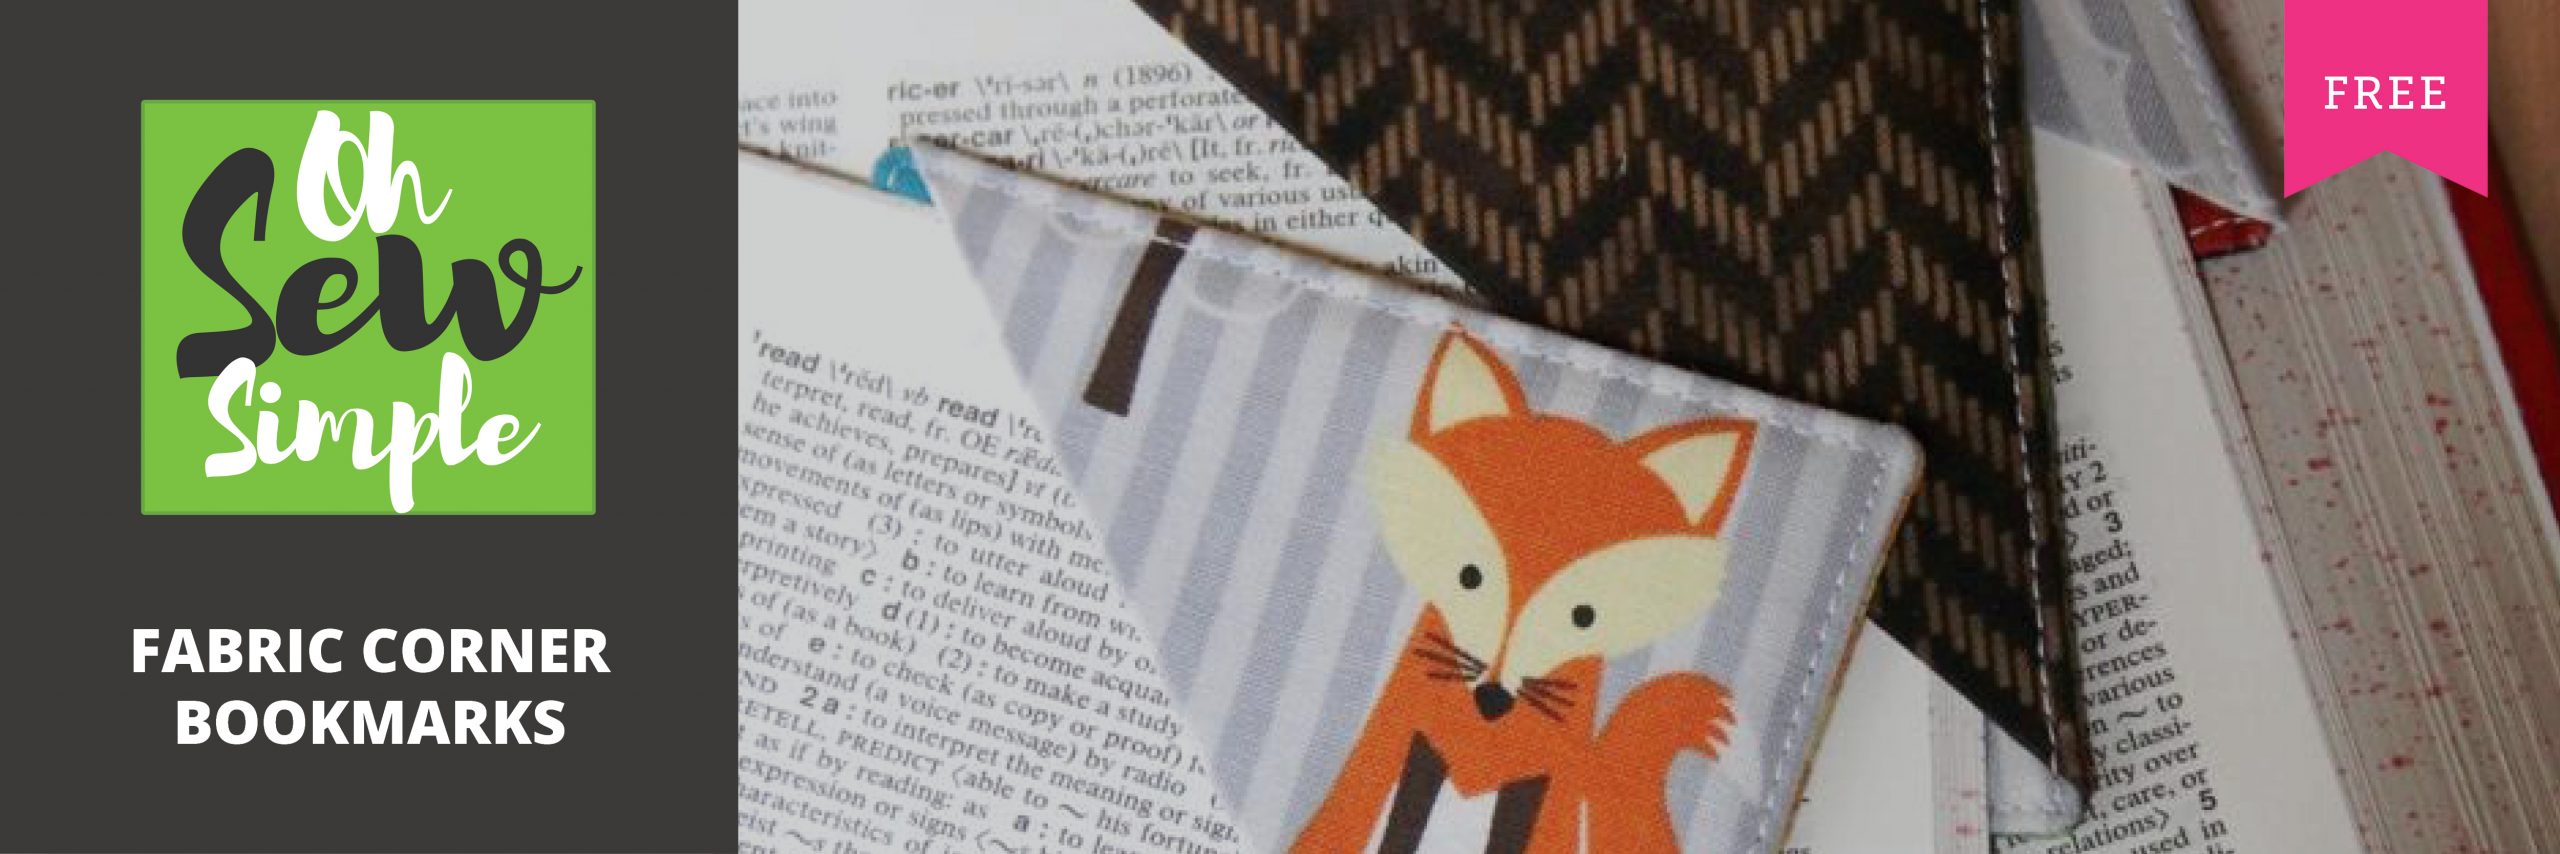 Fabric corner bookmarks